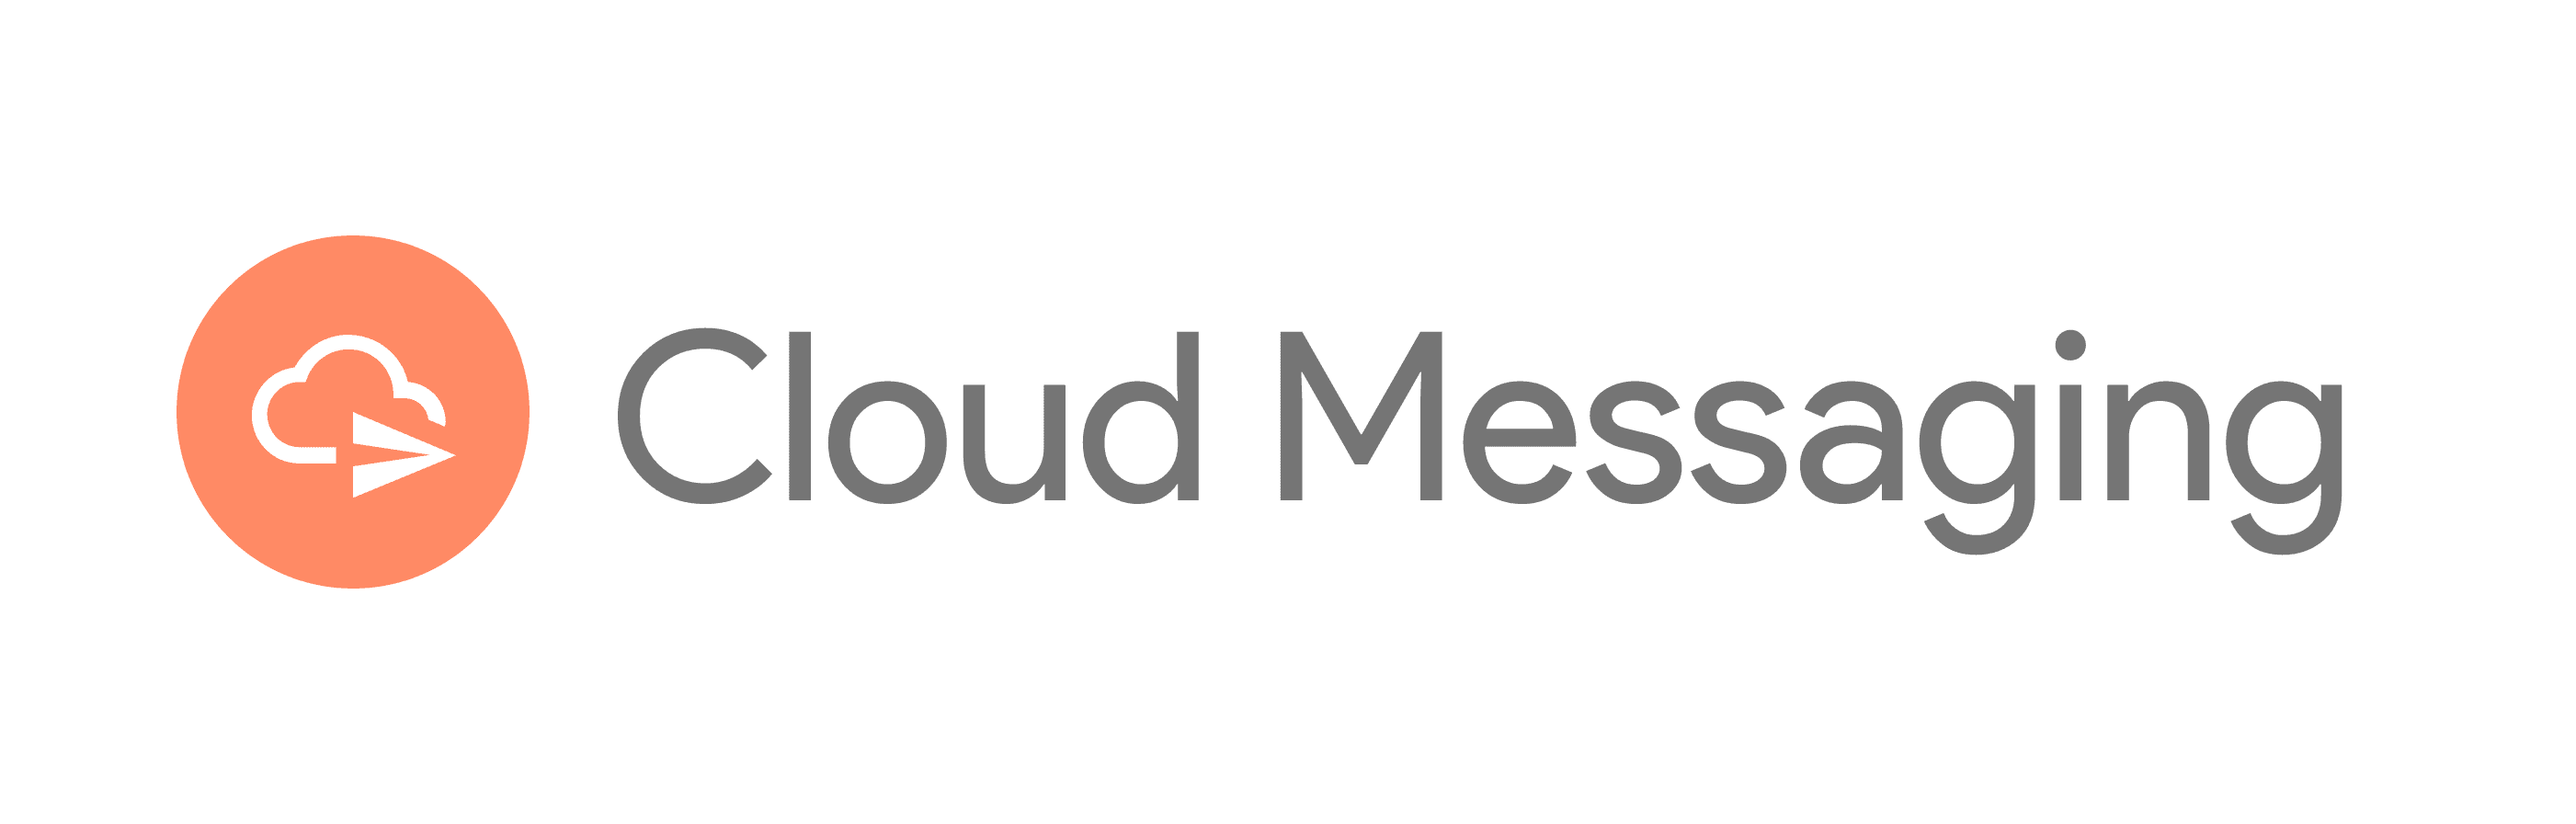 Firebase Cloud Messaging.png